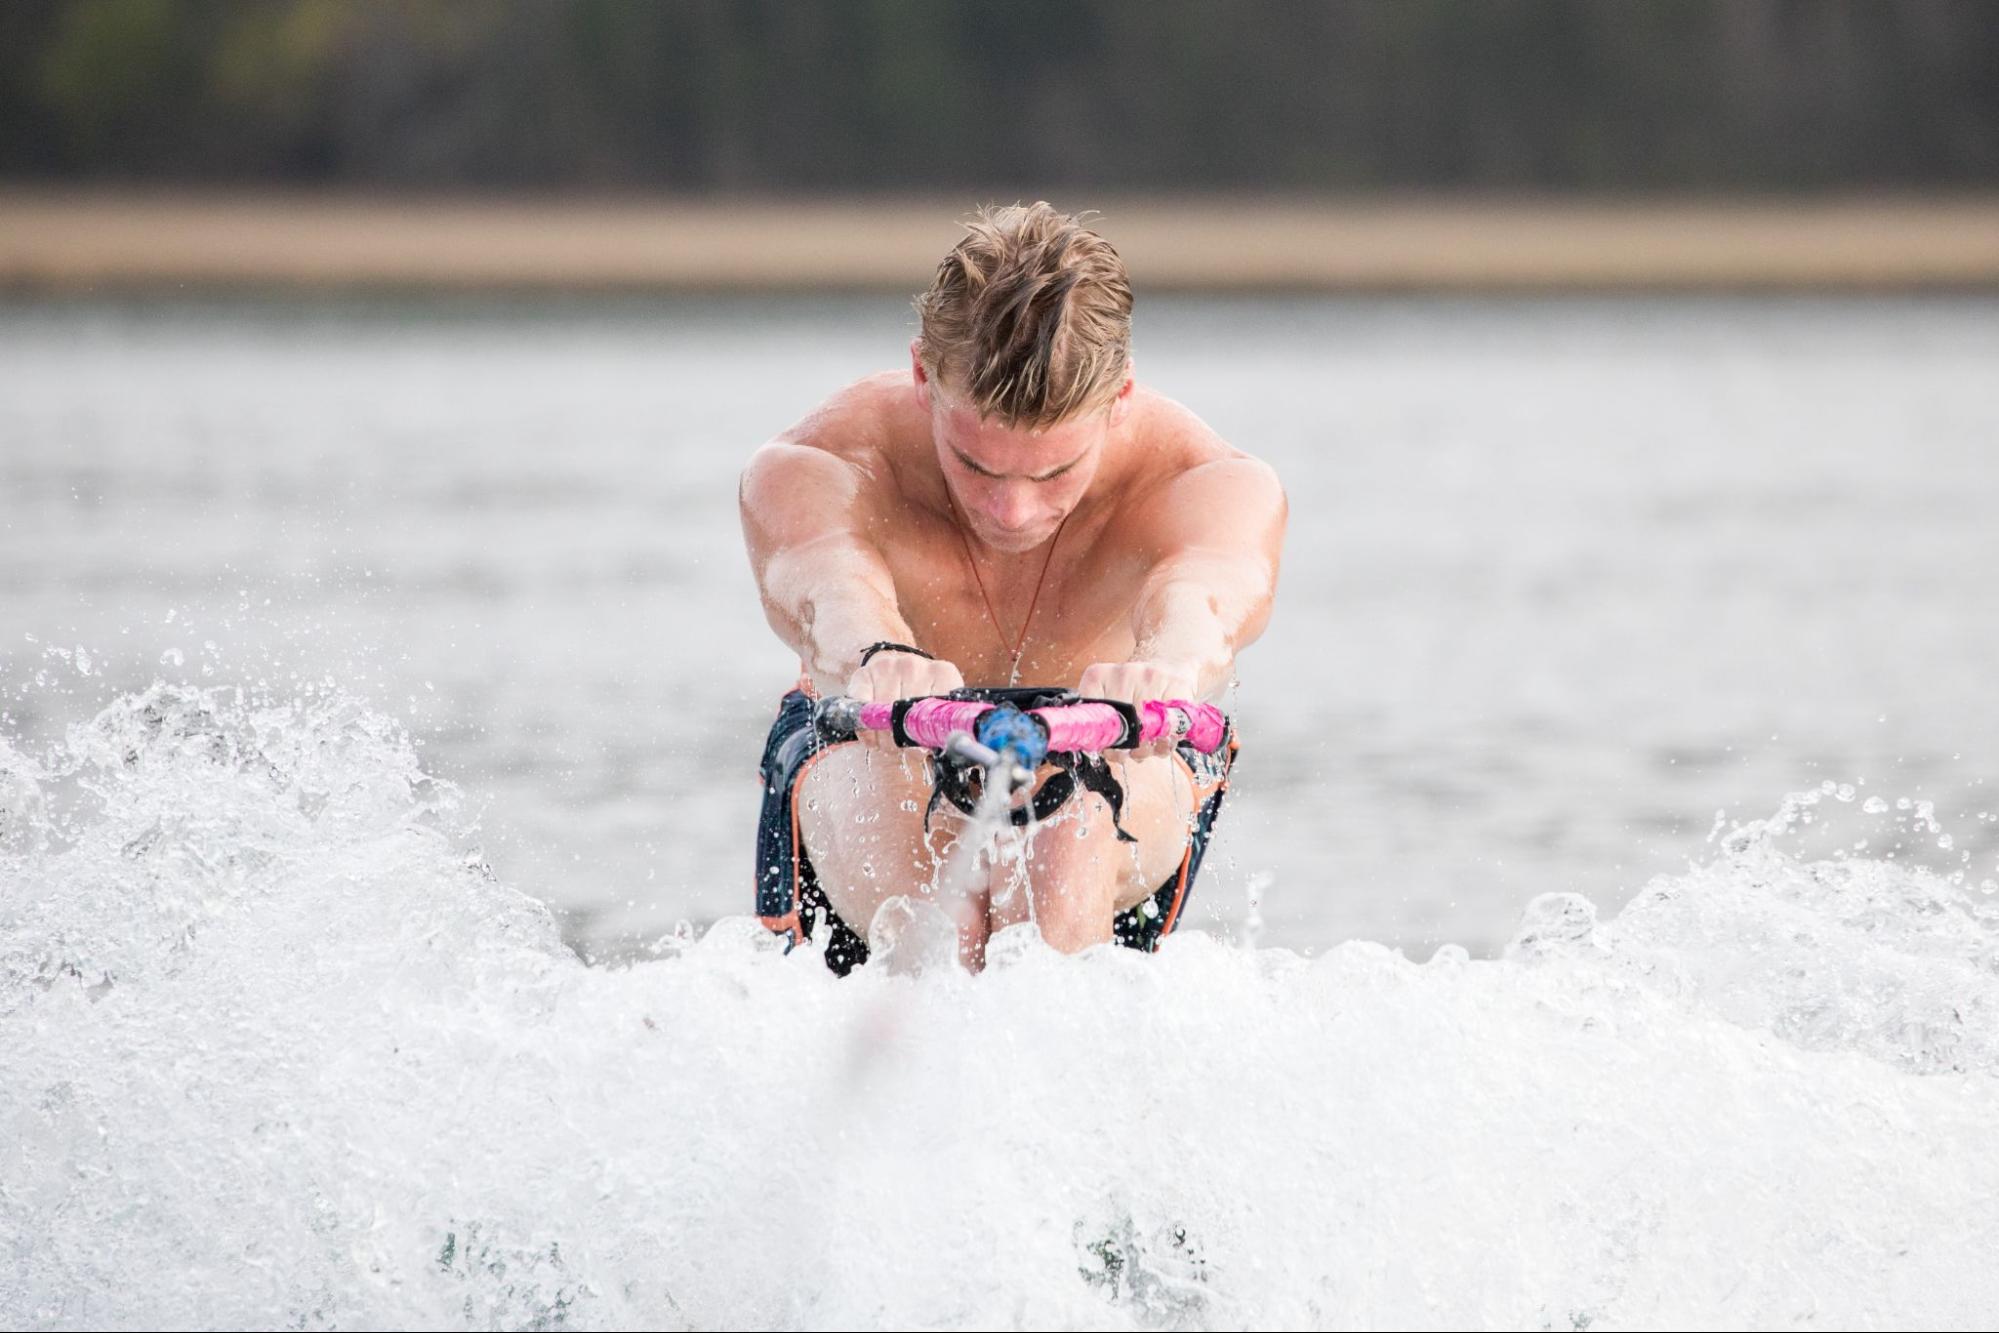 A man focusing on balancing while water skiing.